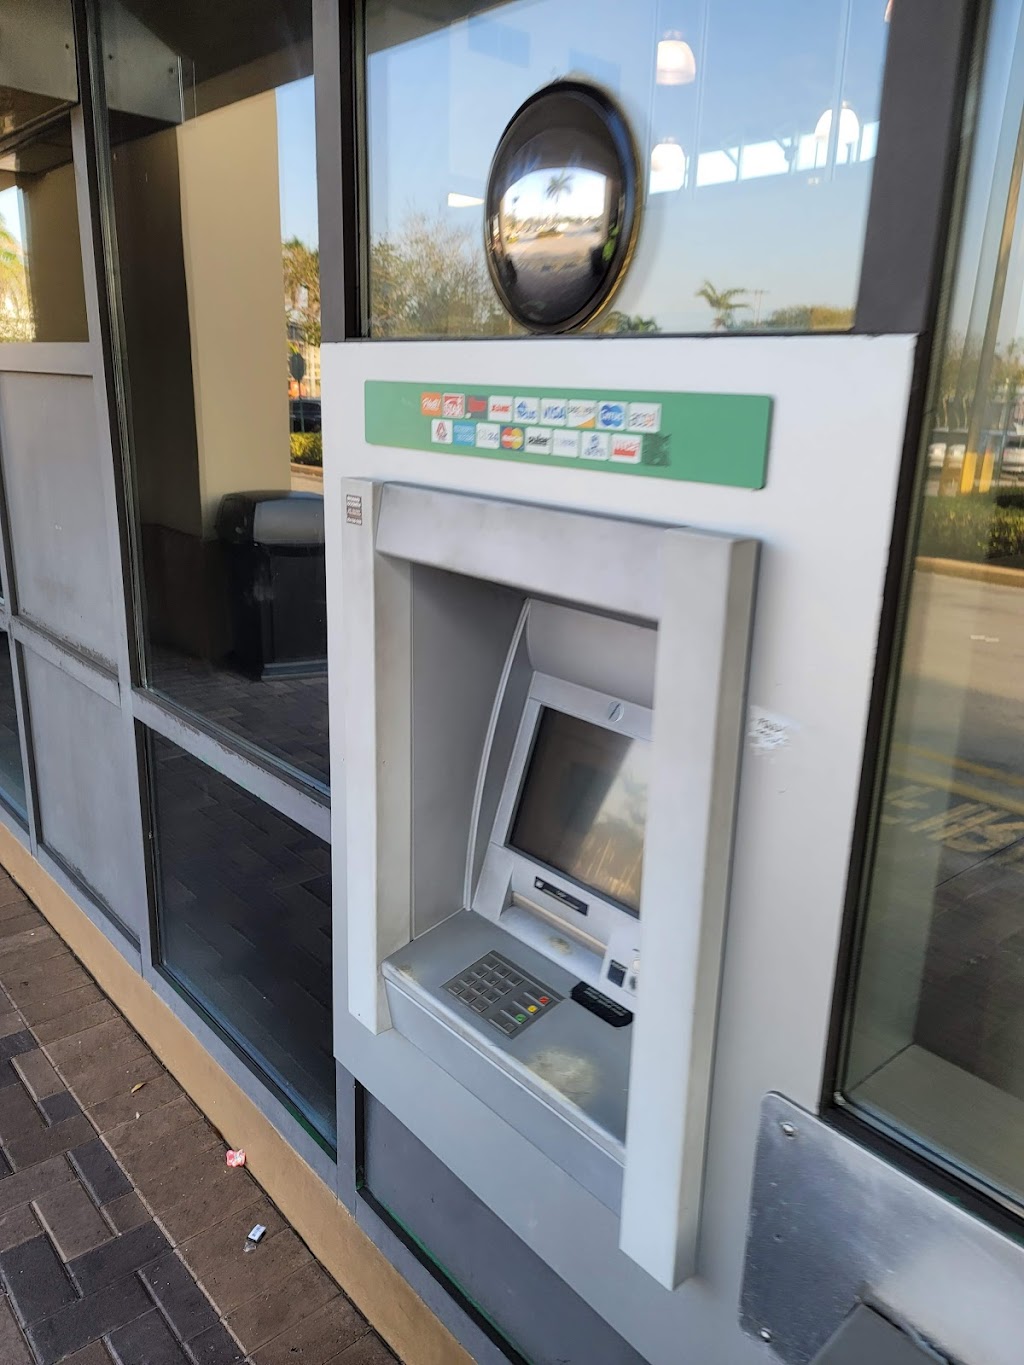 Presto! ATM at Publix Super Market - atm  | Photo 1 of 3 | Address: 5211 Sheridan St, Hollywood, FL 33021, USA | Phone: (863) 688-1188